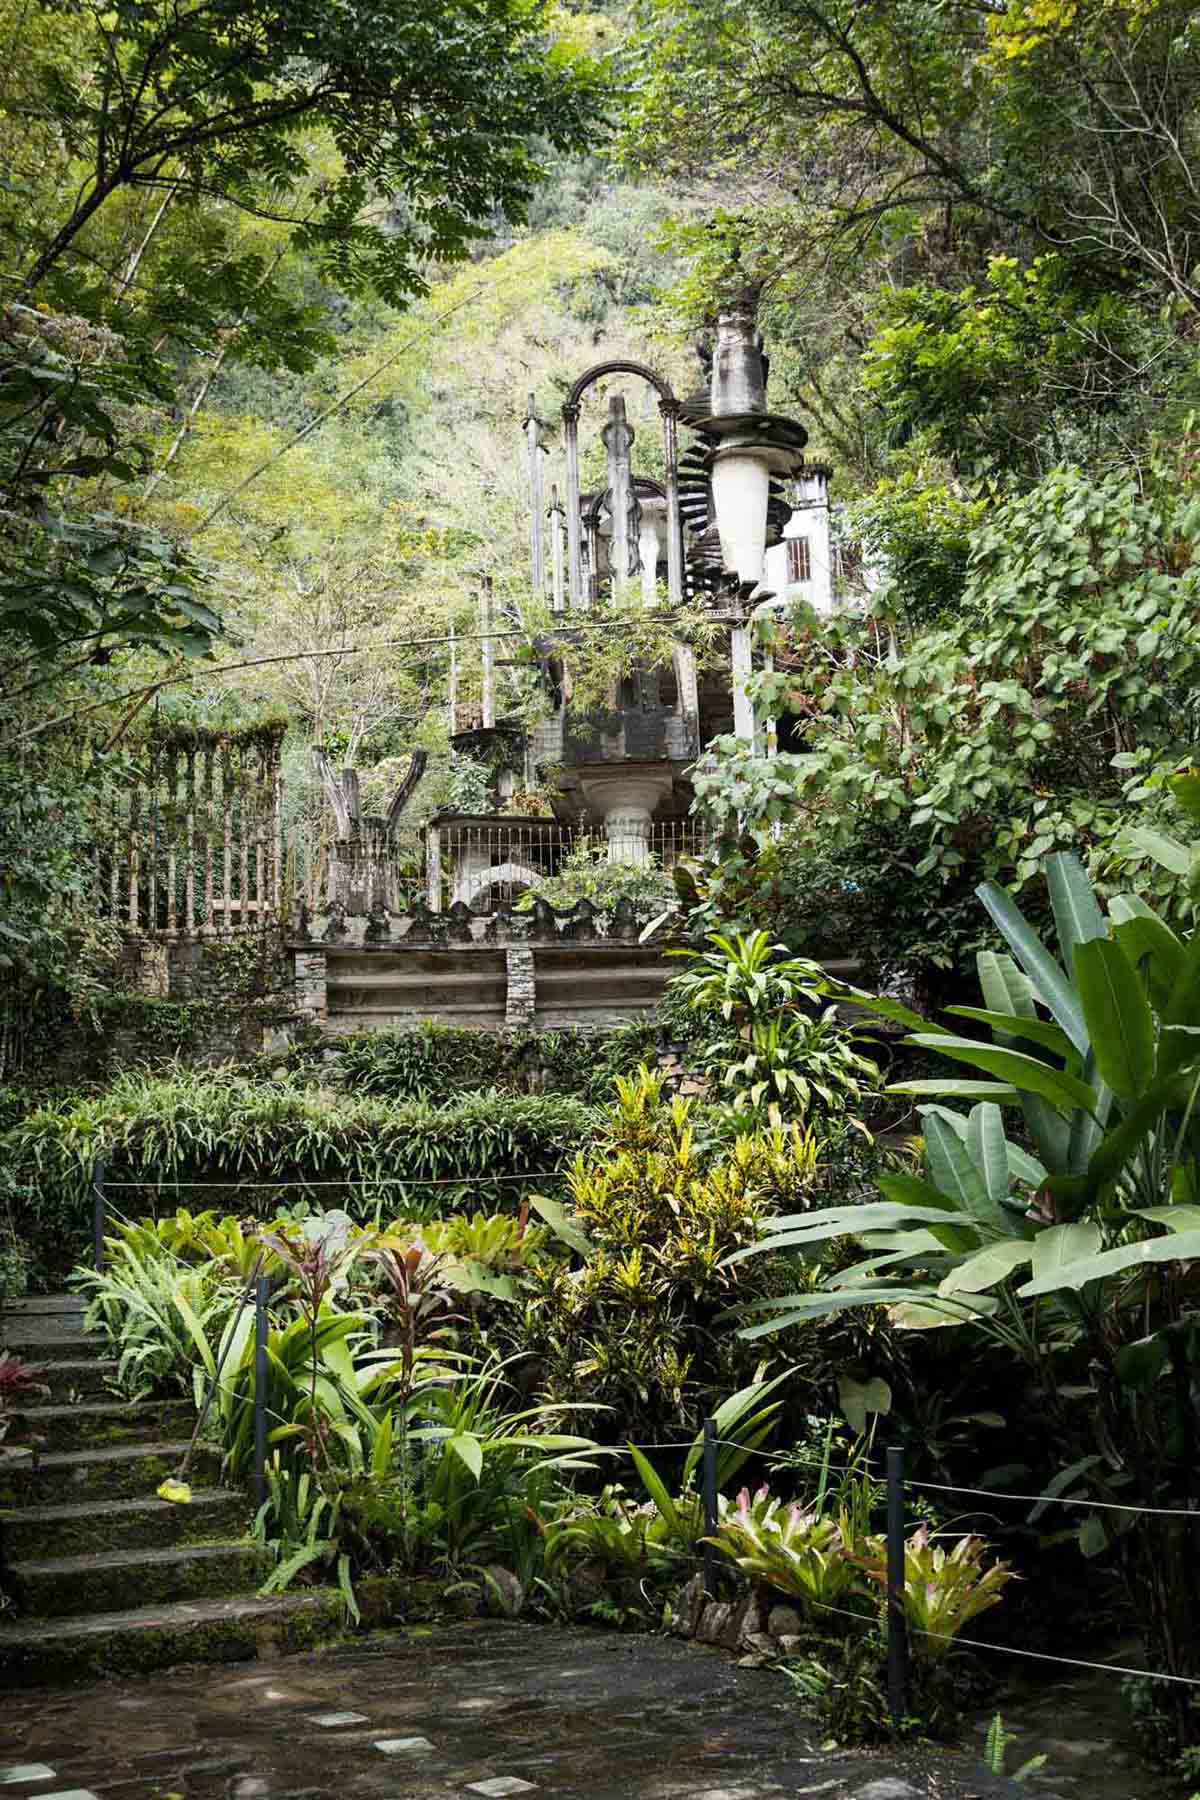 The garden and Surrealist structures of Los Pozas in Xilitla, Mexico